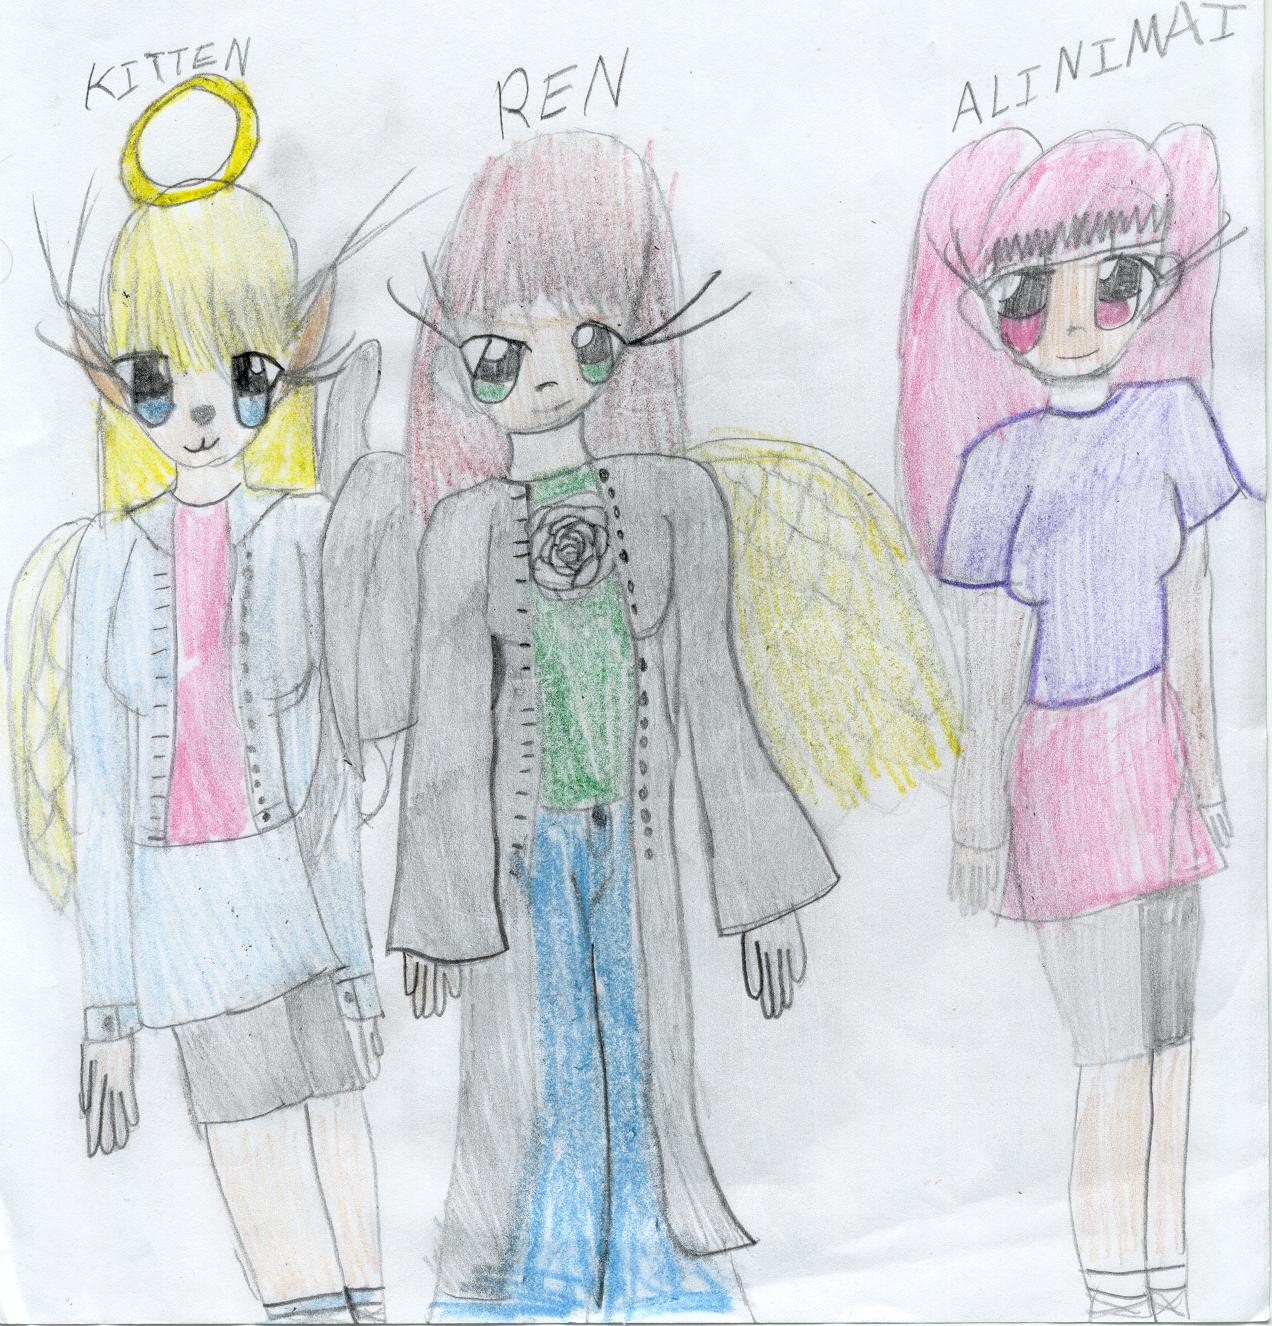 Ren,Kitten, and Alinimai;Angels of the Future by Kittenrocks